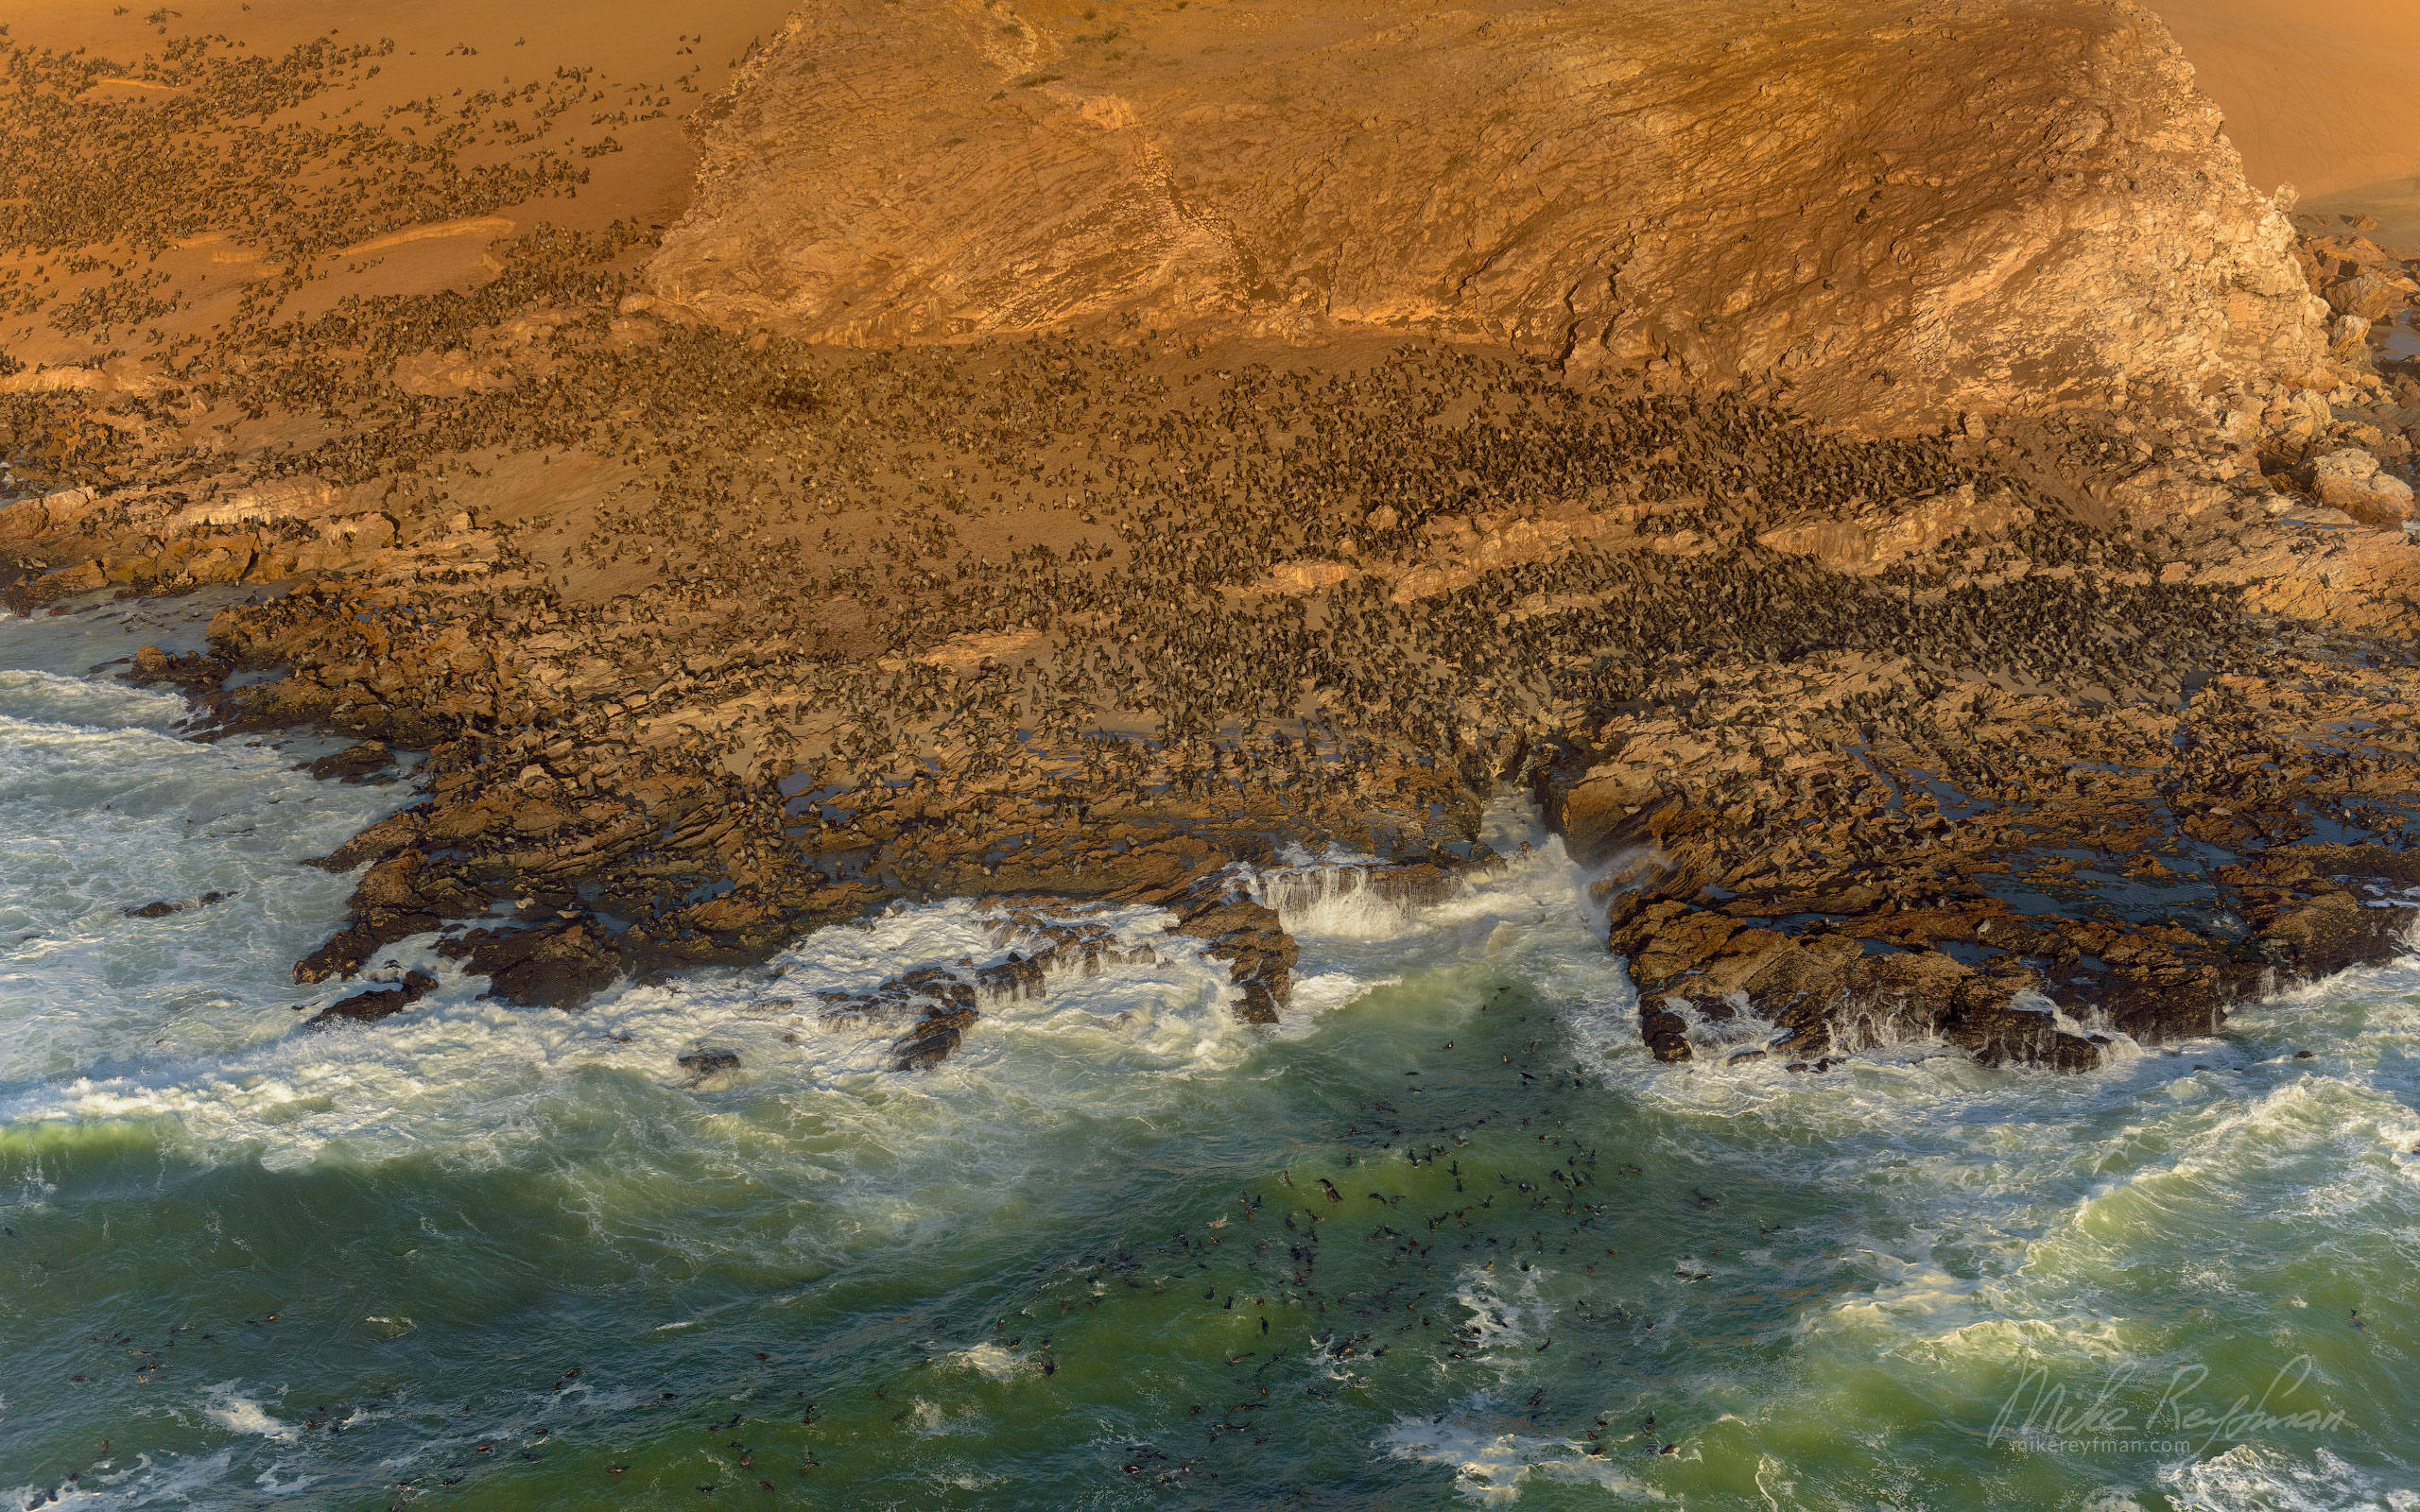 Cape Fur Seals. Namib Skeleton Coast National Park, Namibia SCW_036_10N2996 - Shipwrecks and Endless Dunes of Namib Skeleton Coast NP, Dense ocean fogs of the Benguela Current, Cape Fur seals, and Walvis Bay Salt Works. Namibia.  - Mike Reyfman Photography